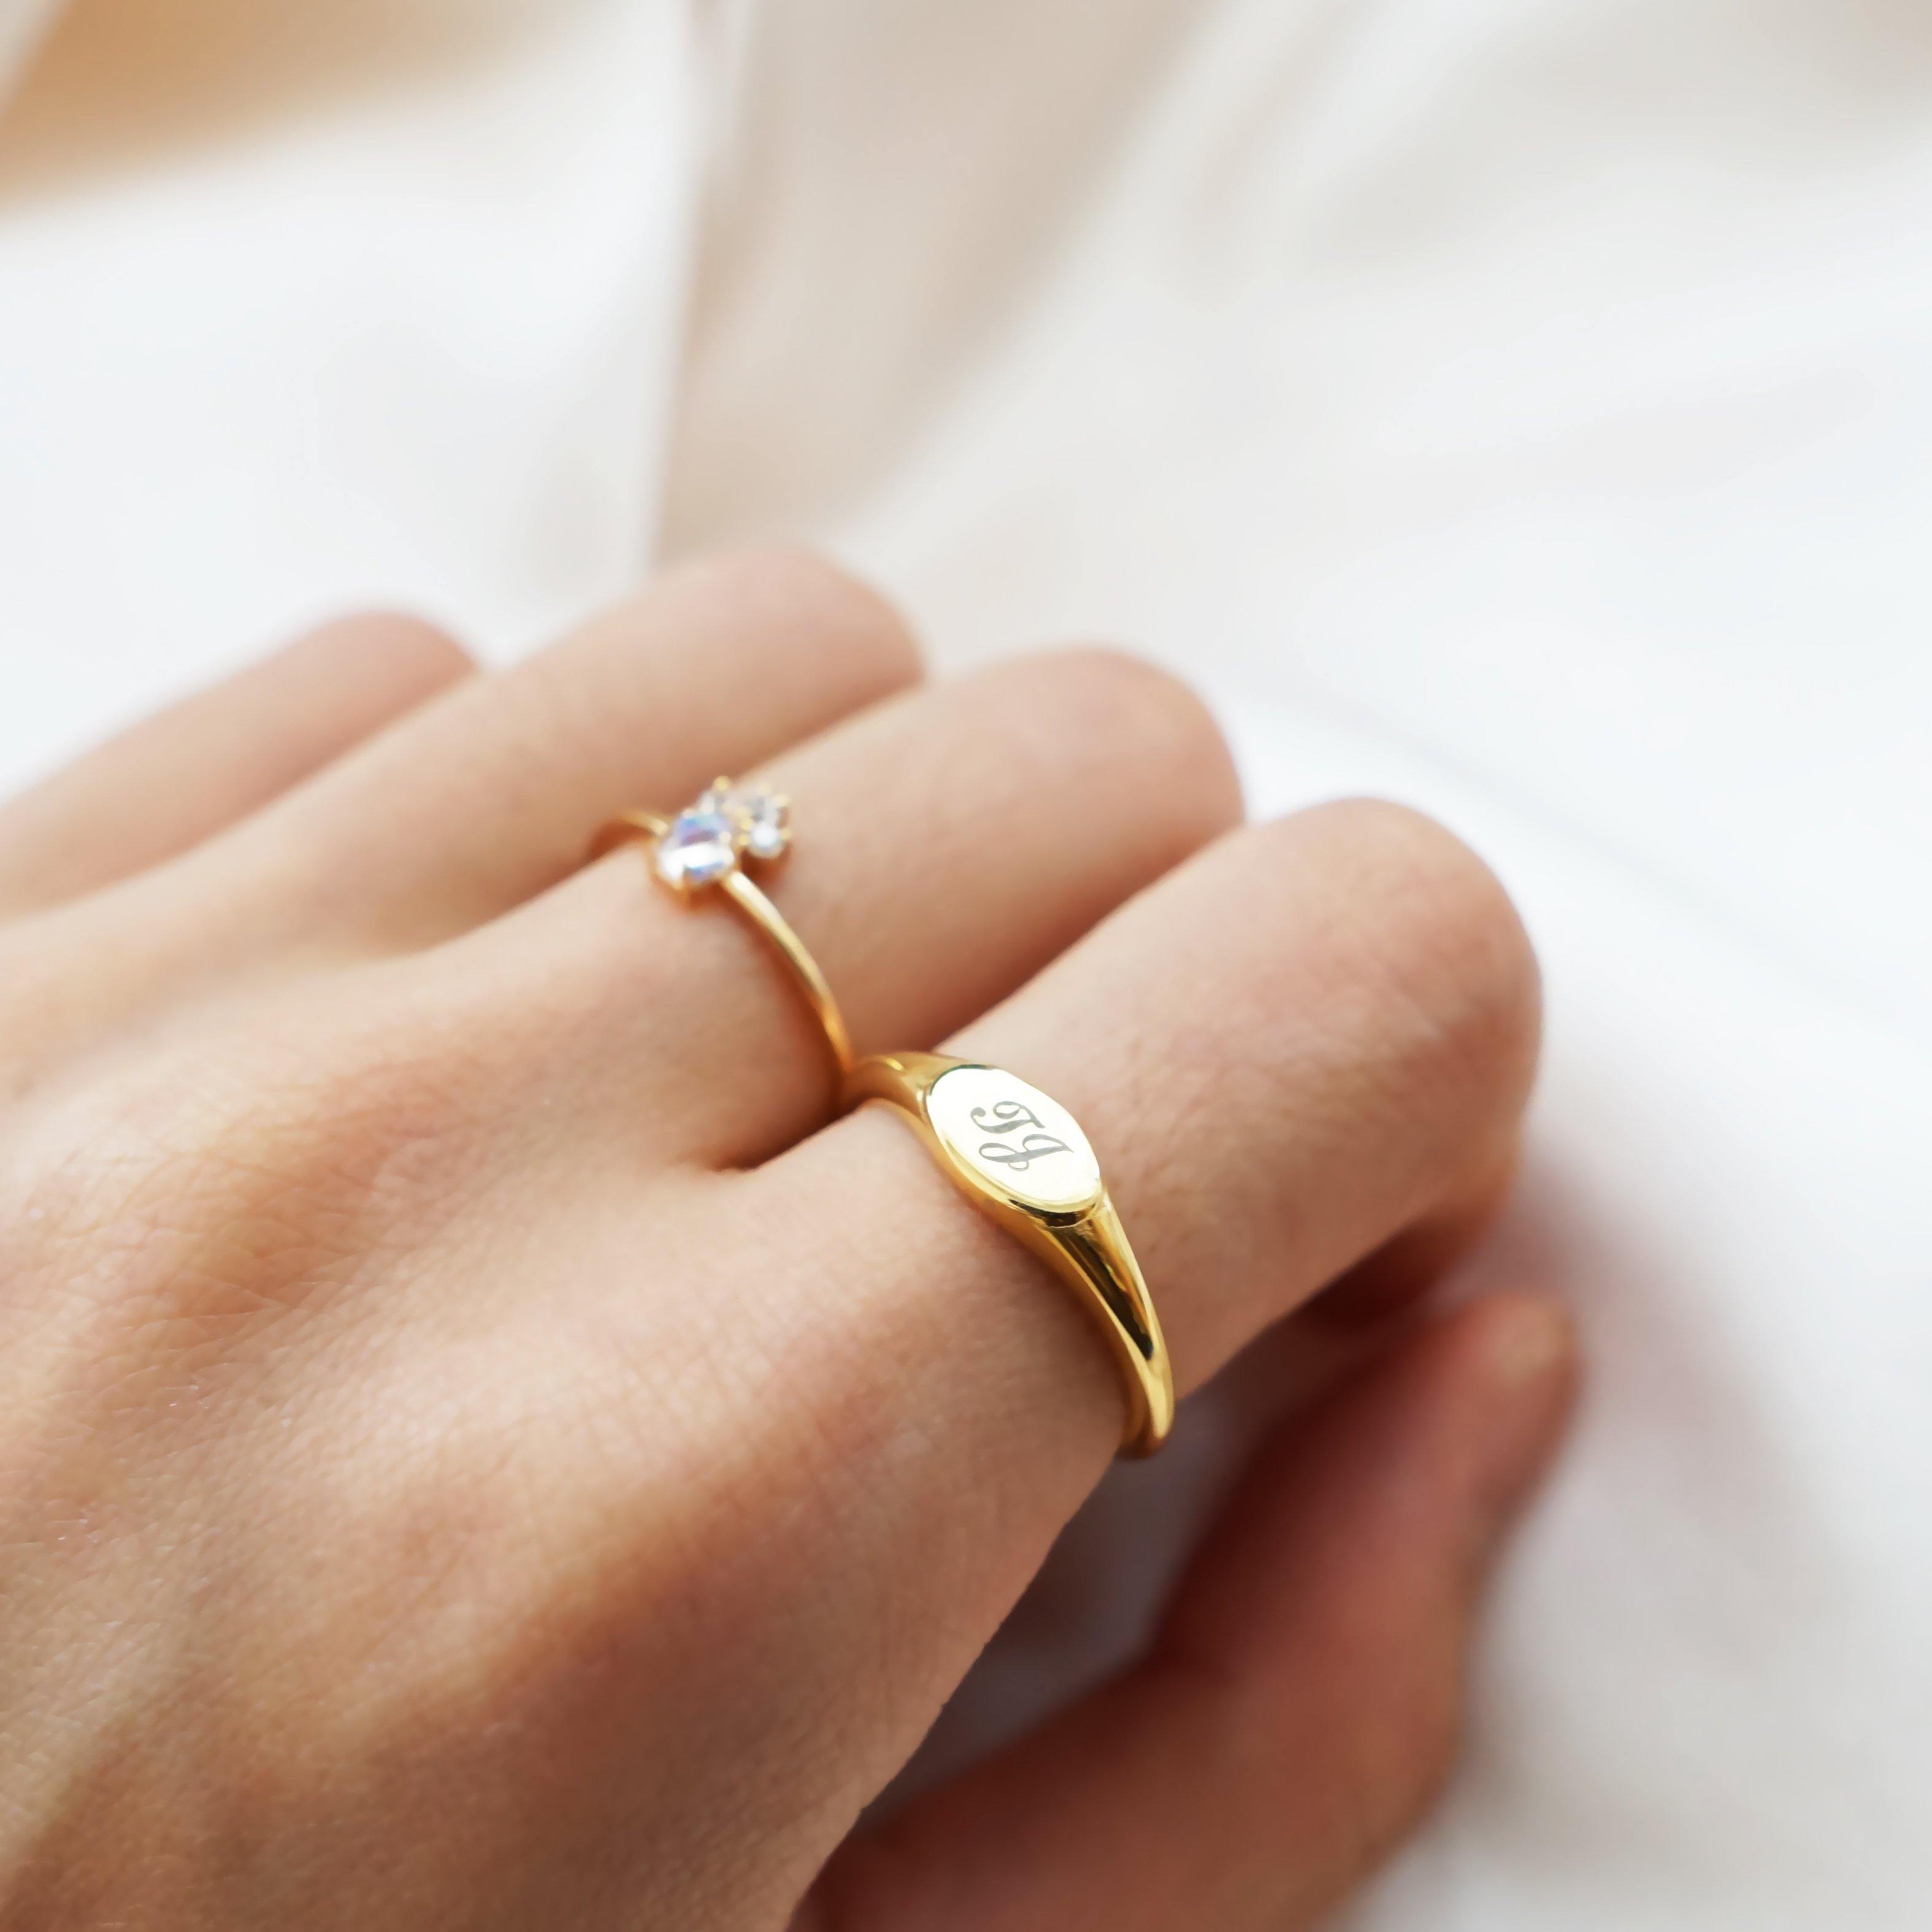 The Jane Ring - Personalized Mini Signet Ring - Shiny Gold on Stainless - Studdedheartz